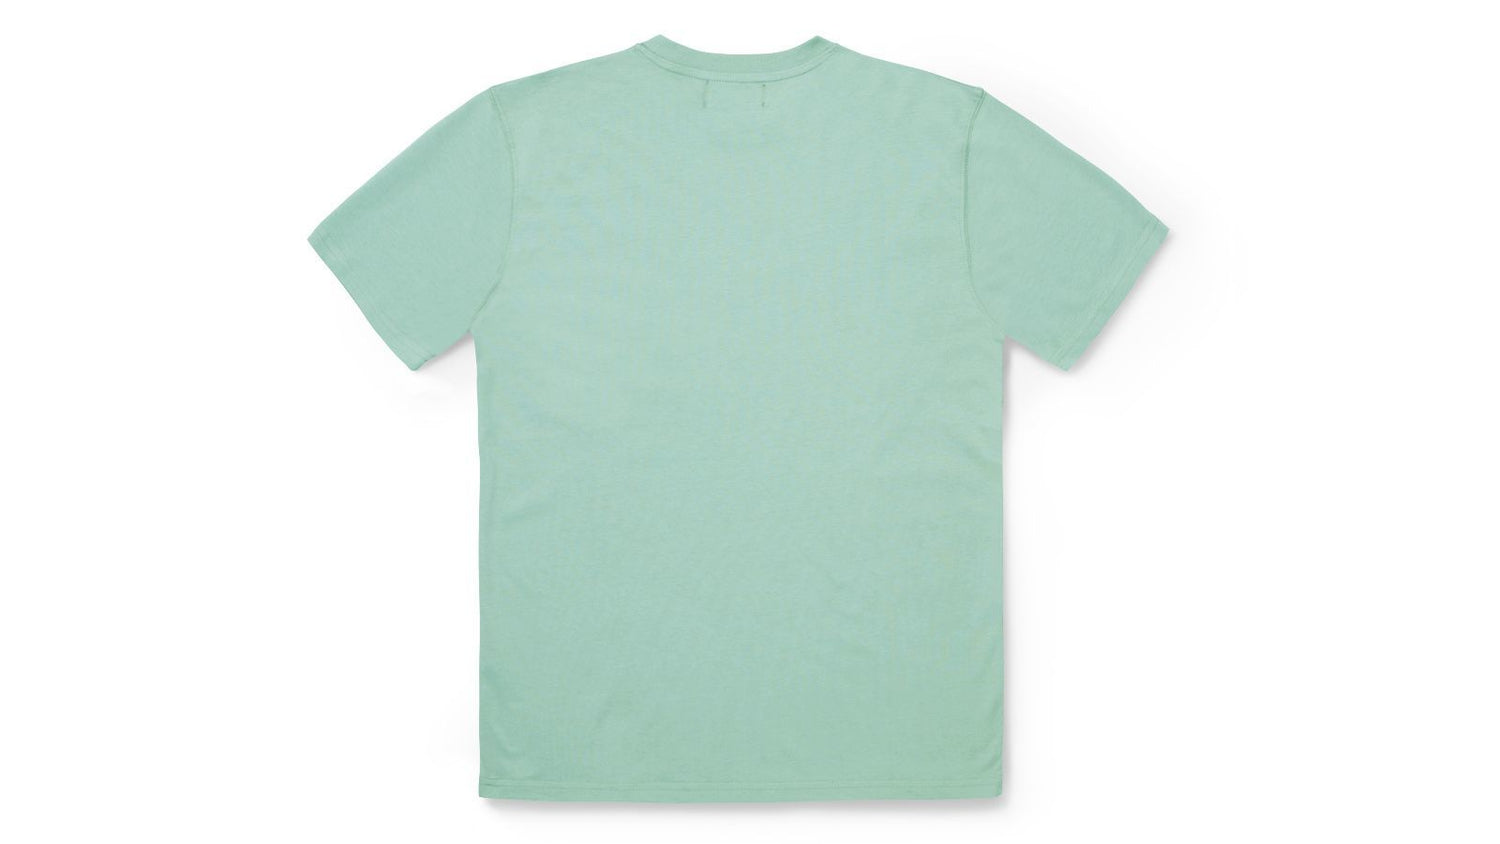 Team college t-shirt-desert sage/ensign blue KA00085-DSEBMC logo